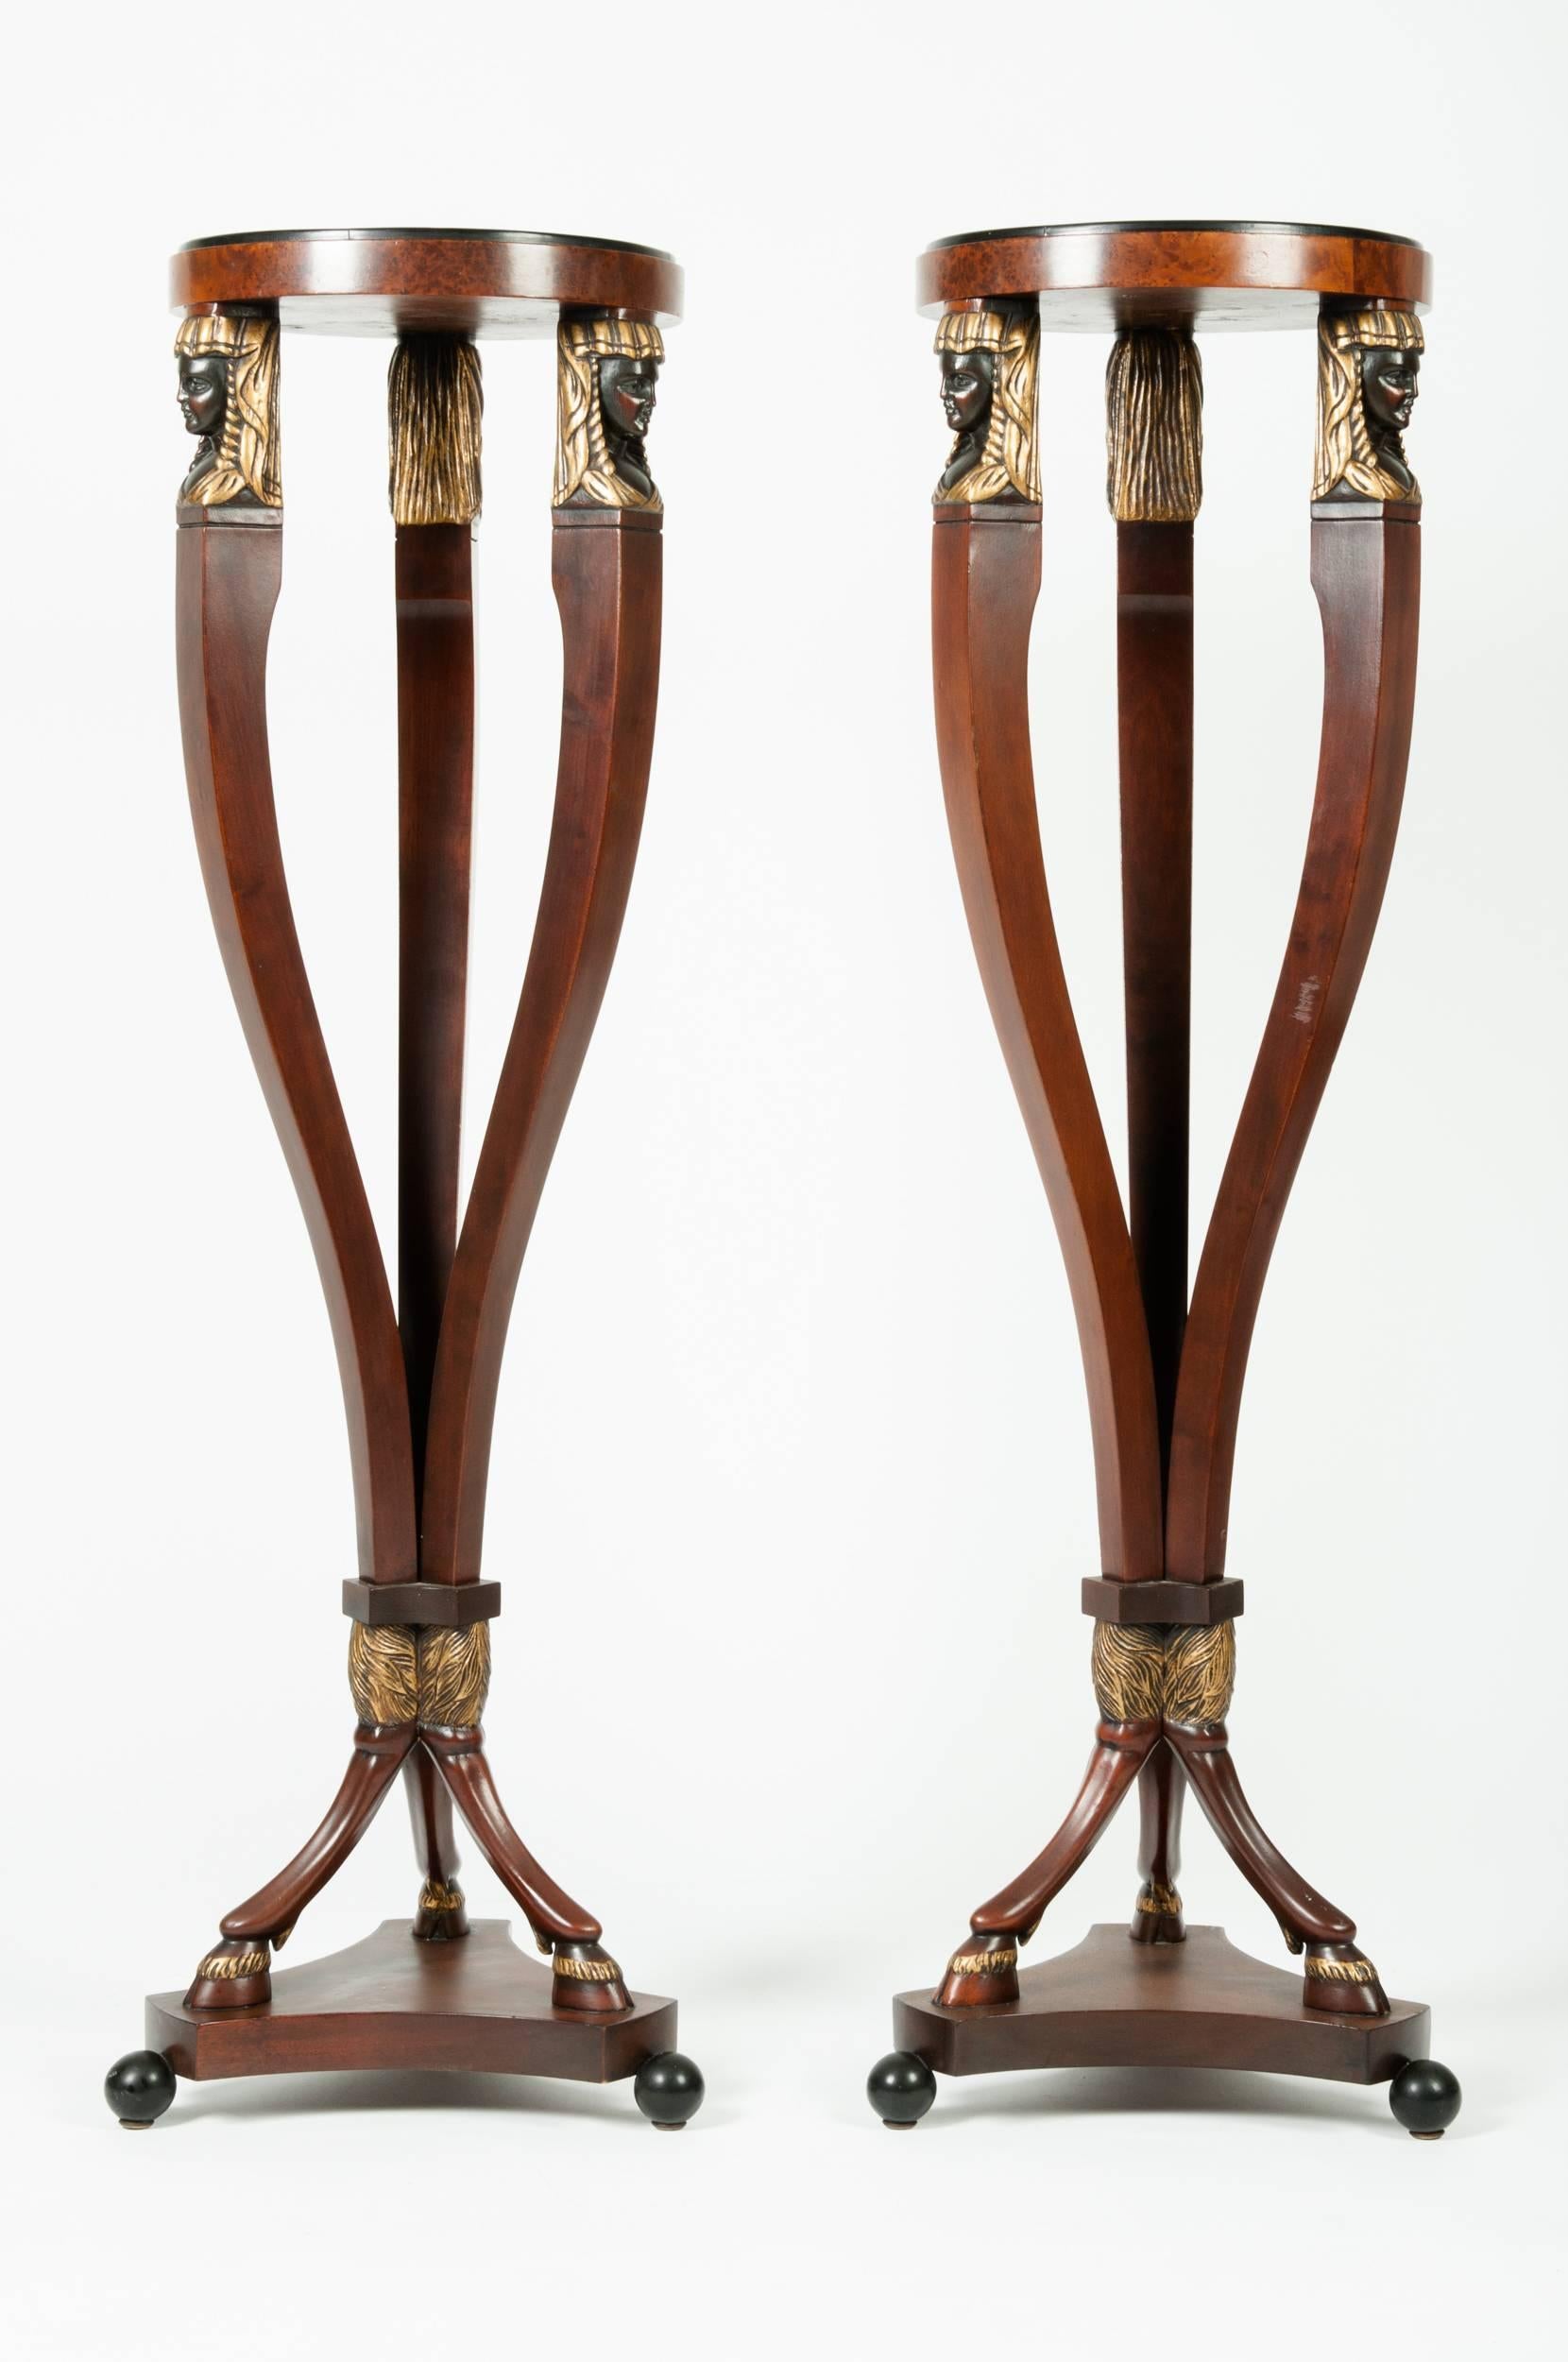 European Vintage Pair of Tall Pedestal Tables